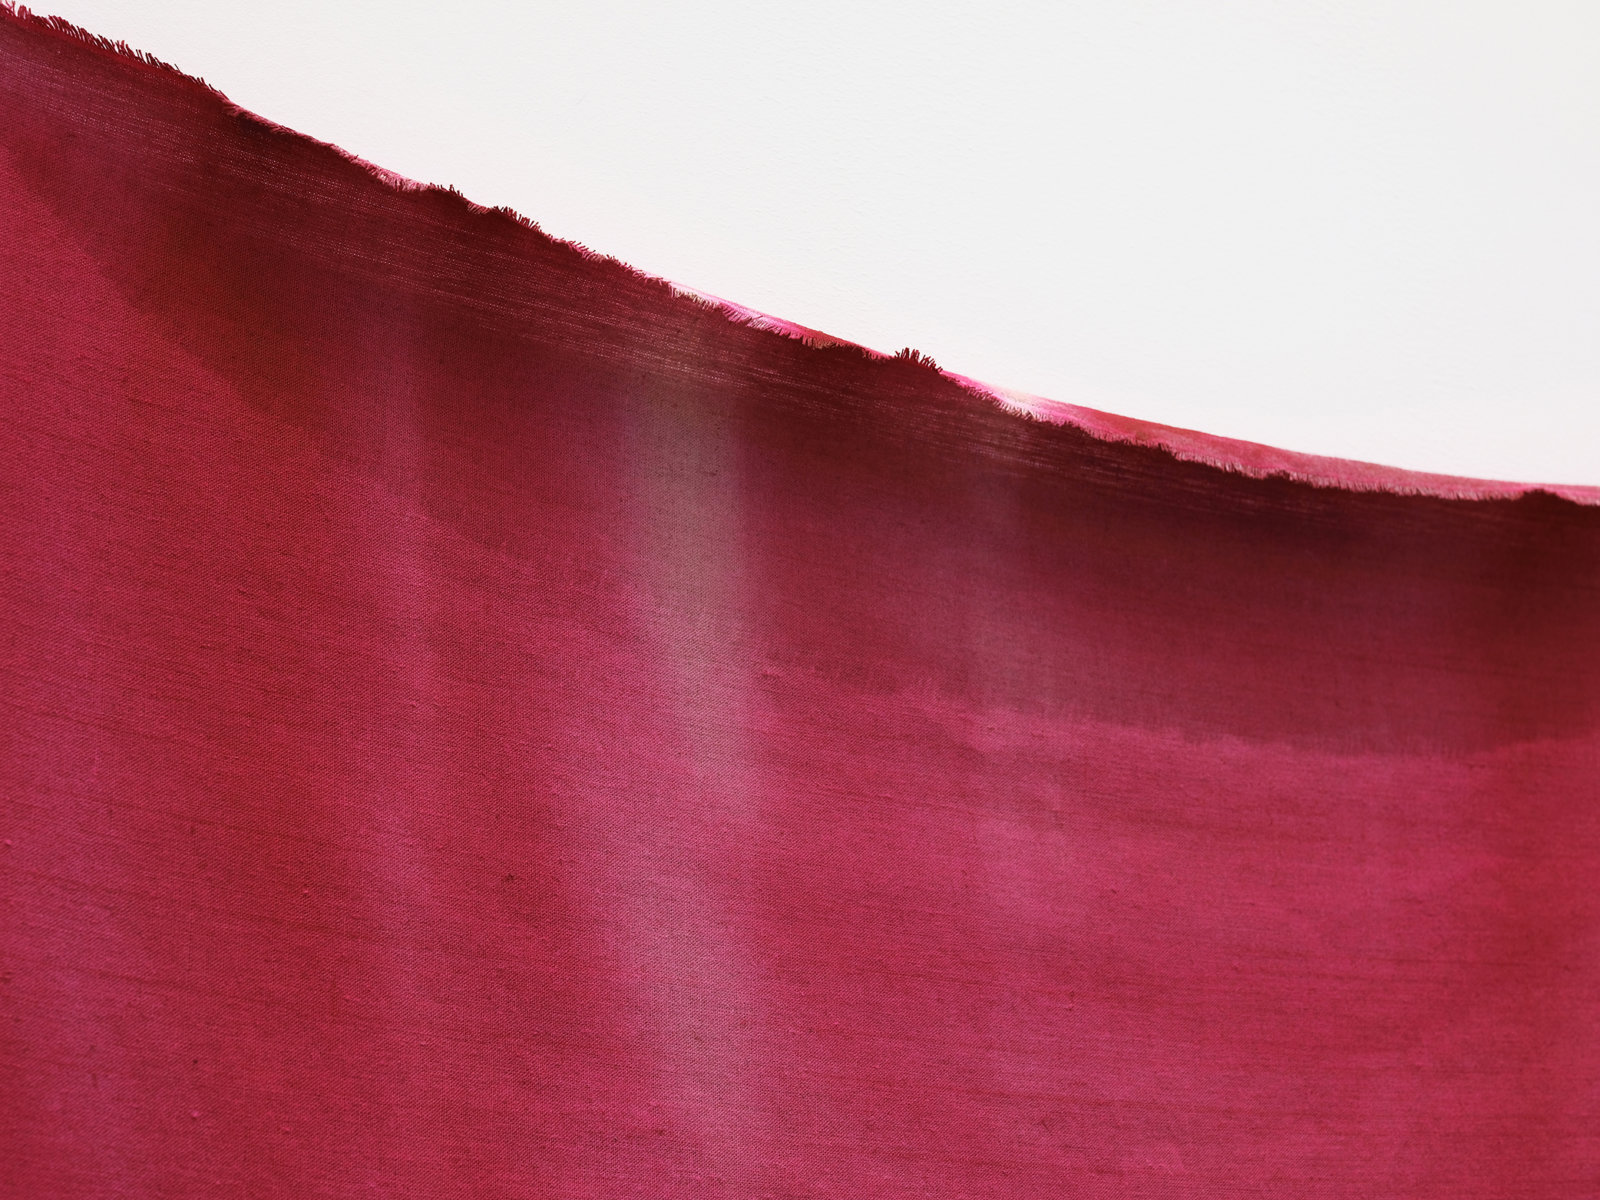 Abbas Akhavan, curtain (detail), 2021, water based pigment on linen, 95 x 101 in. (241 x 257 cm)